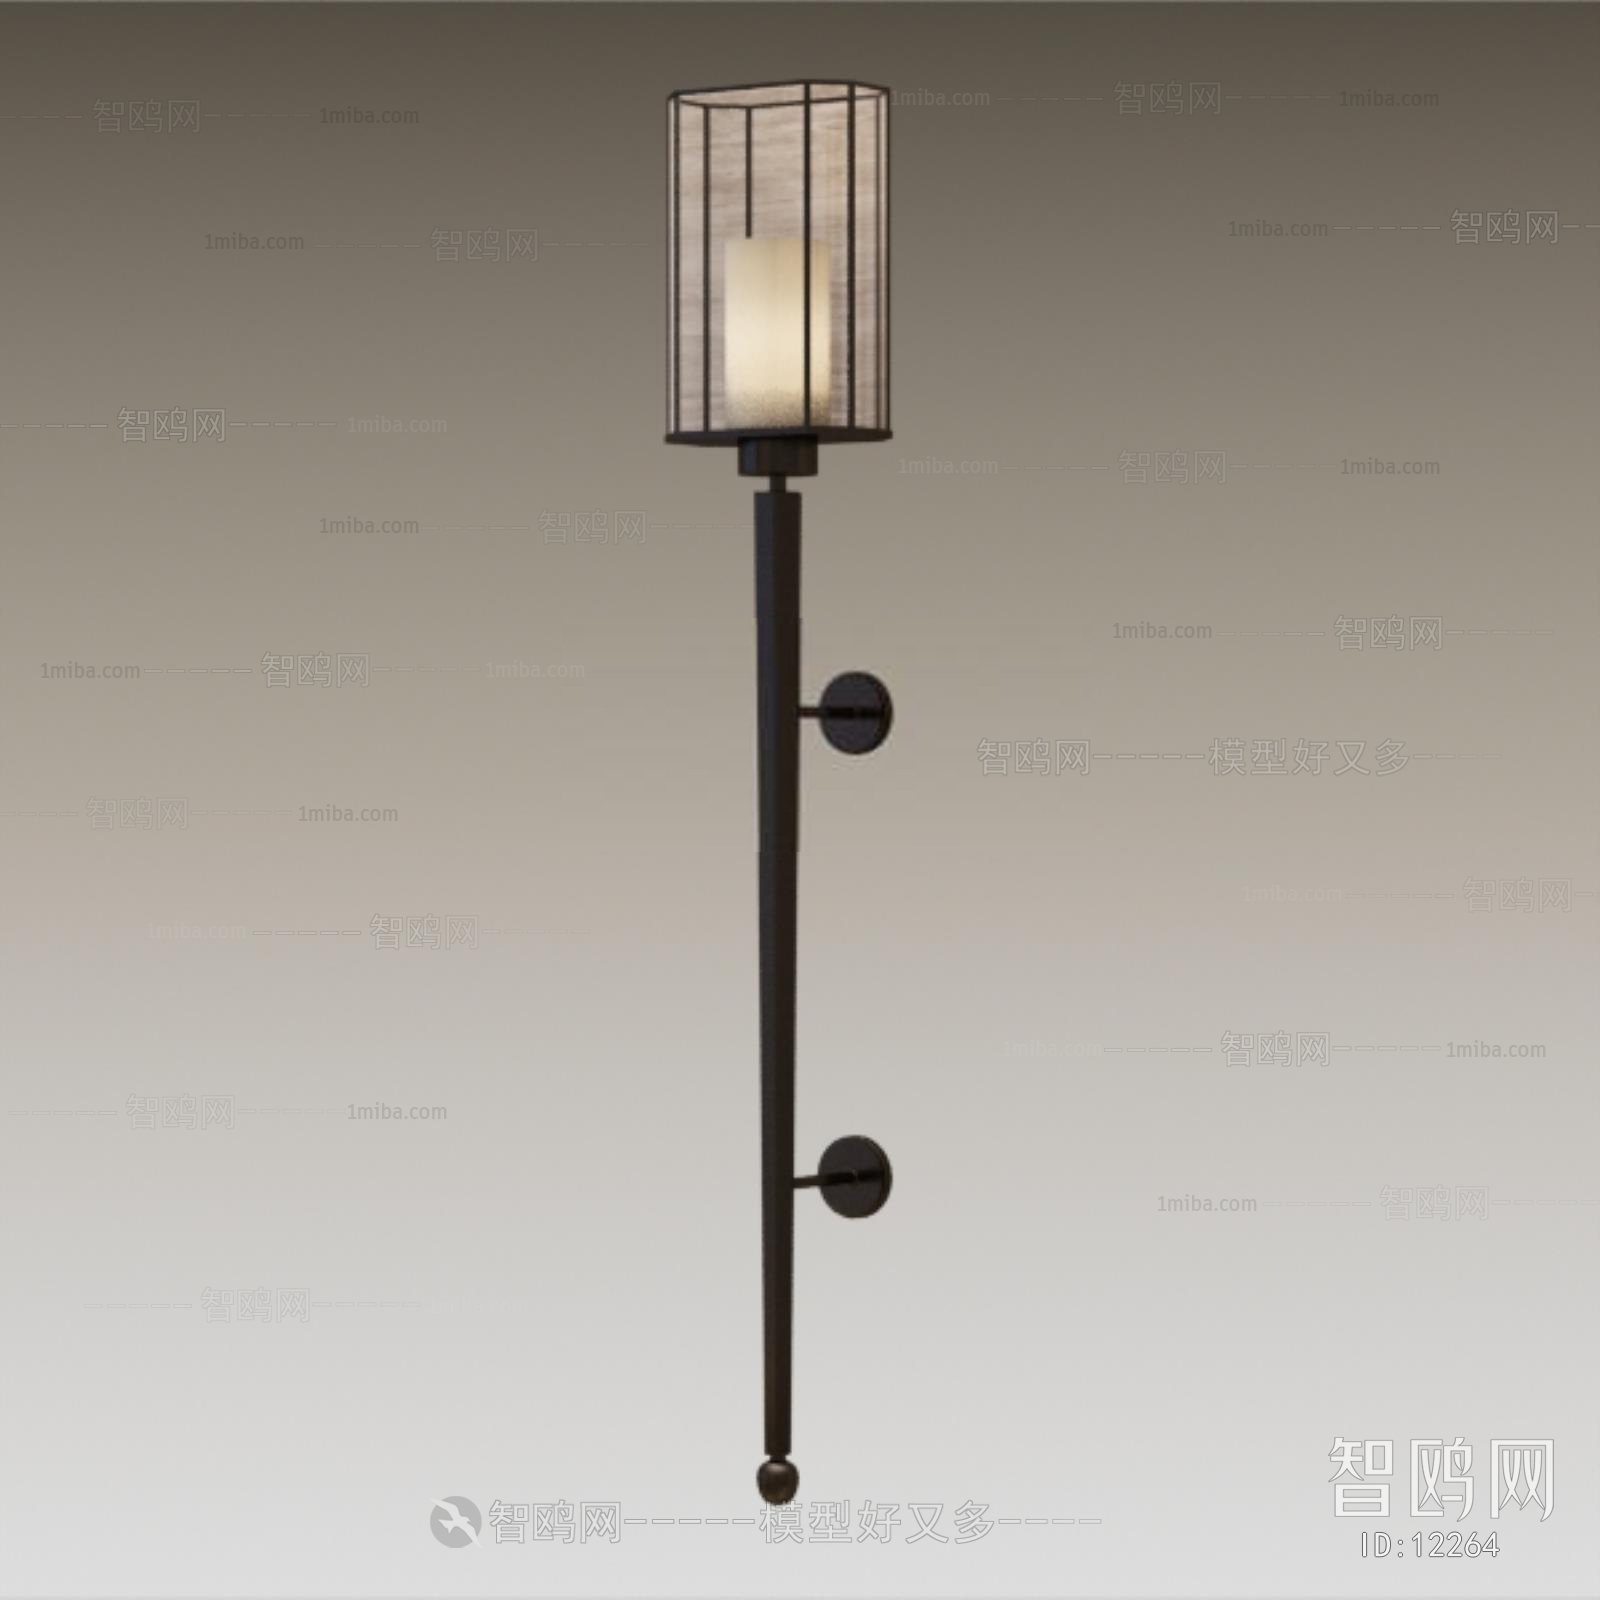 Modern New Chinese Style Wall Lamp